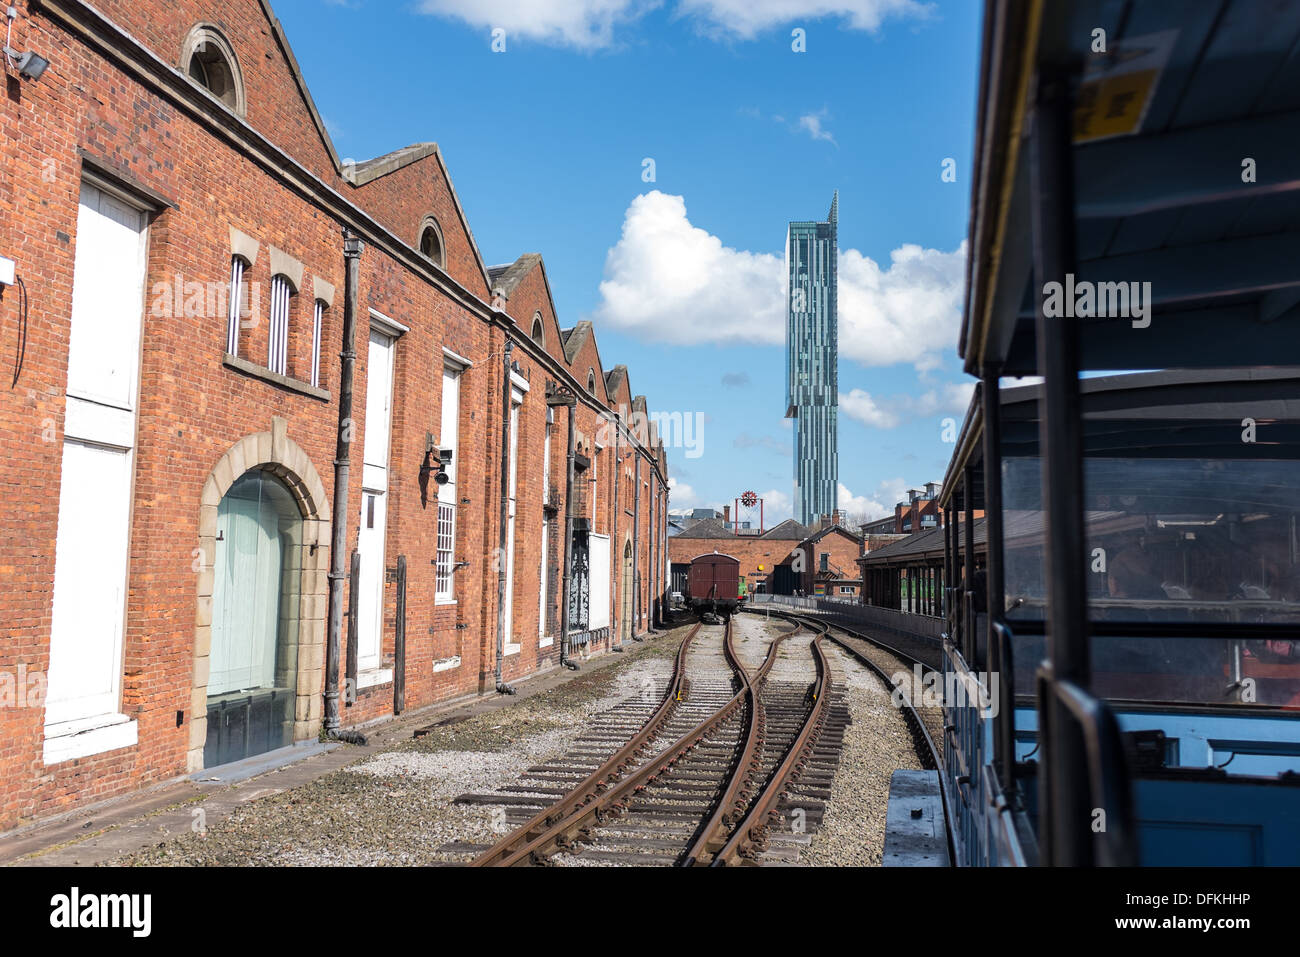 Eisenbahn im Museum of Science and Industry (MOSI), Liverpool Straße, Manchester UK Stockfoto